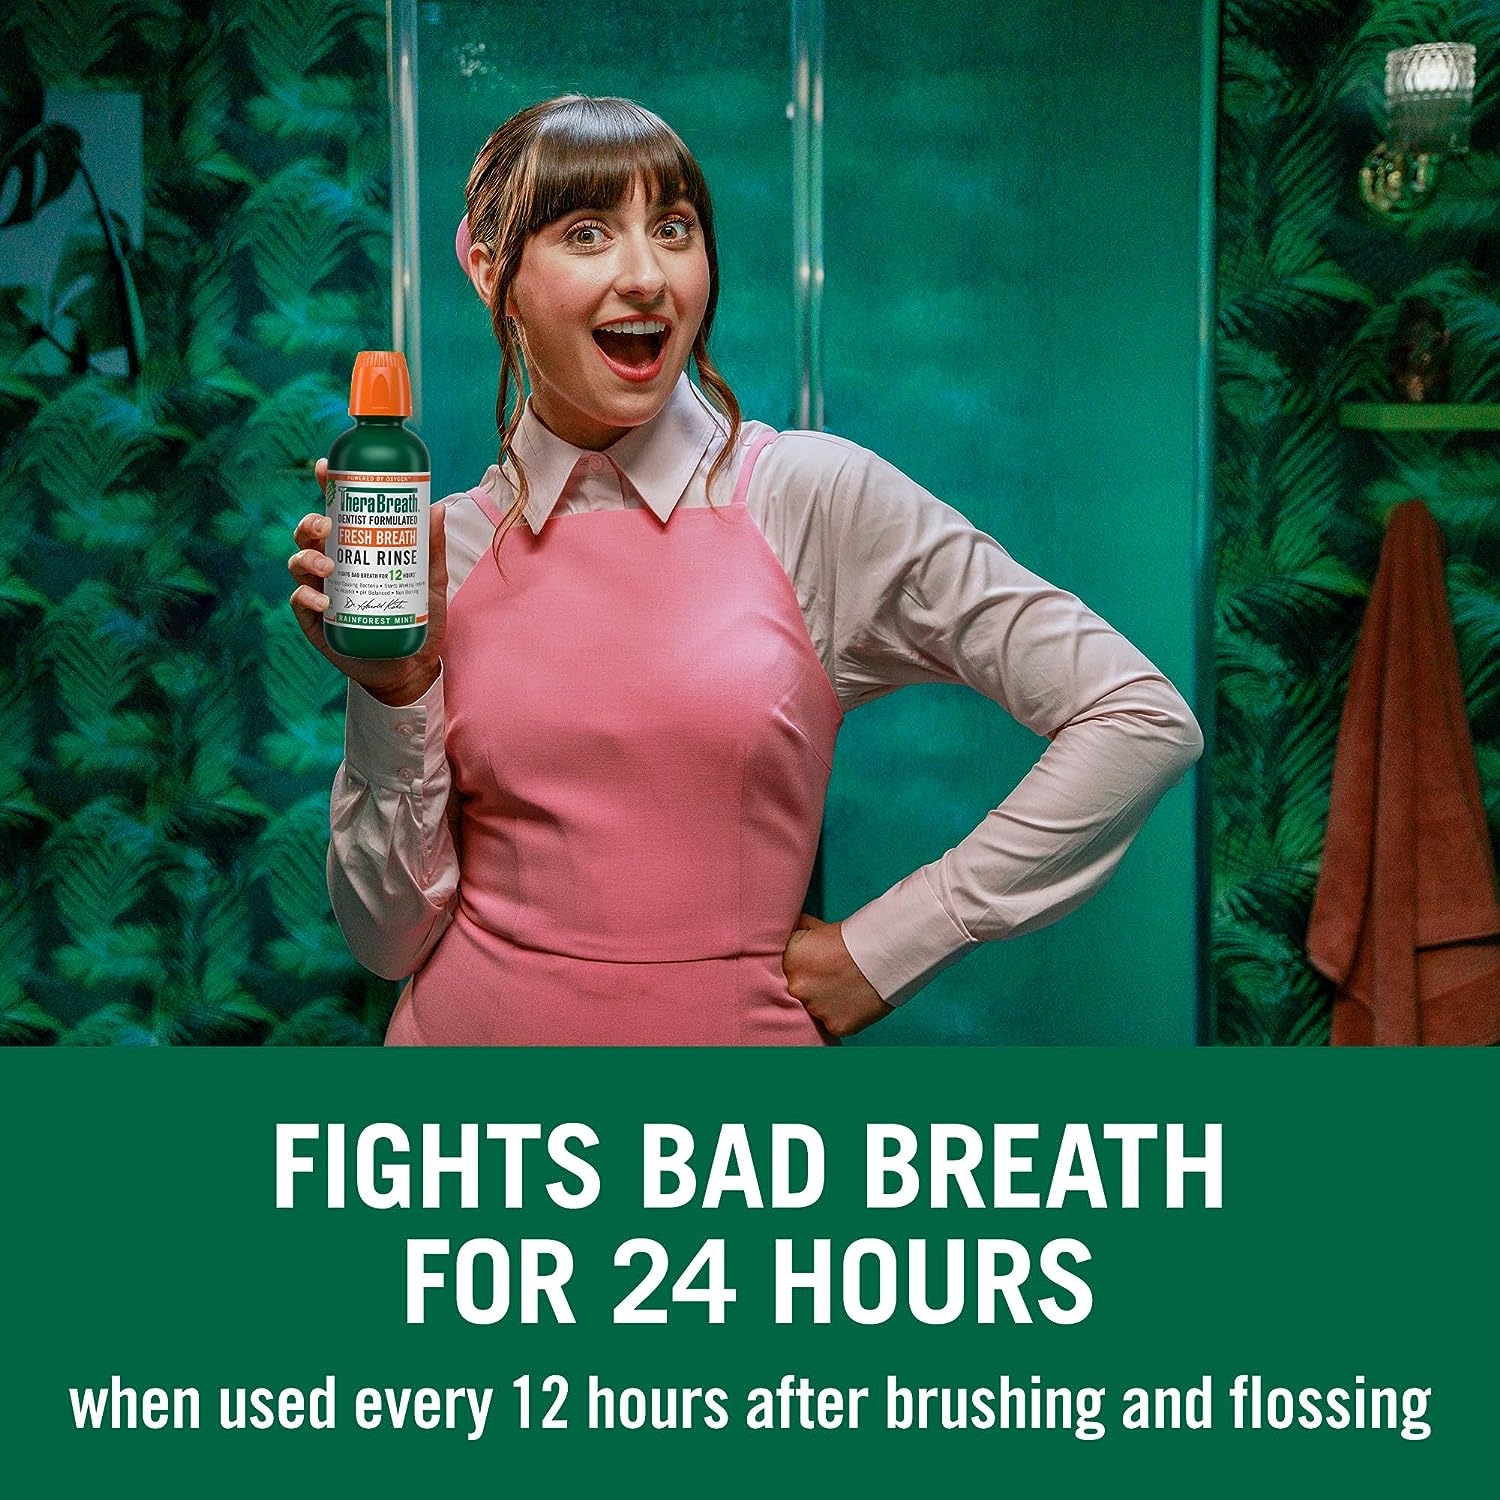 TheraBreath Fresh Breath Mouthwash, Rainforest Mint, Alcohol-Free, 16 Fl Oz (2-Pack)